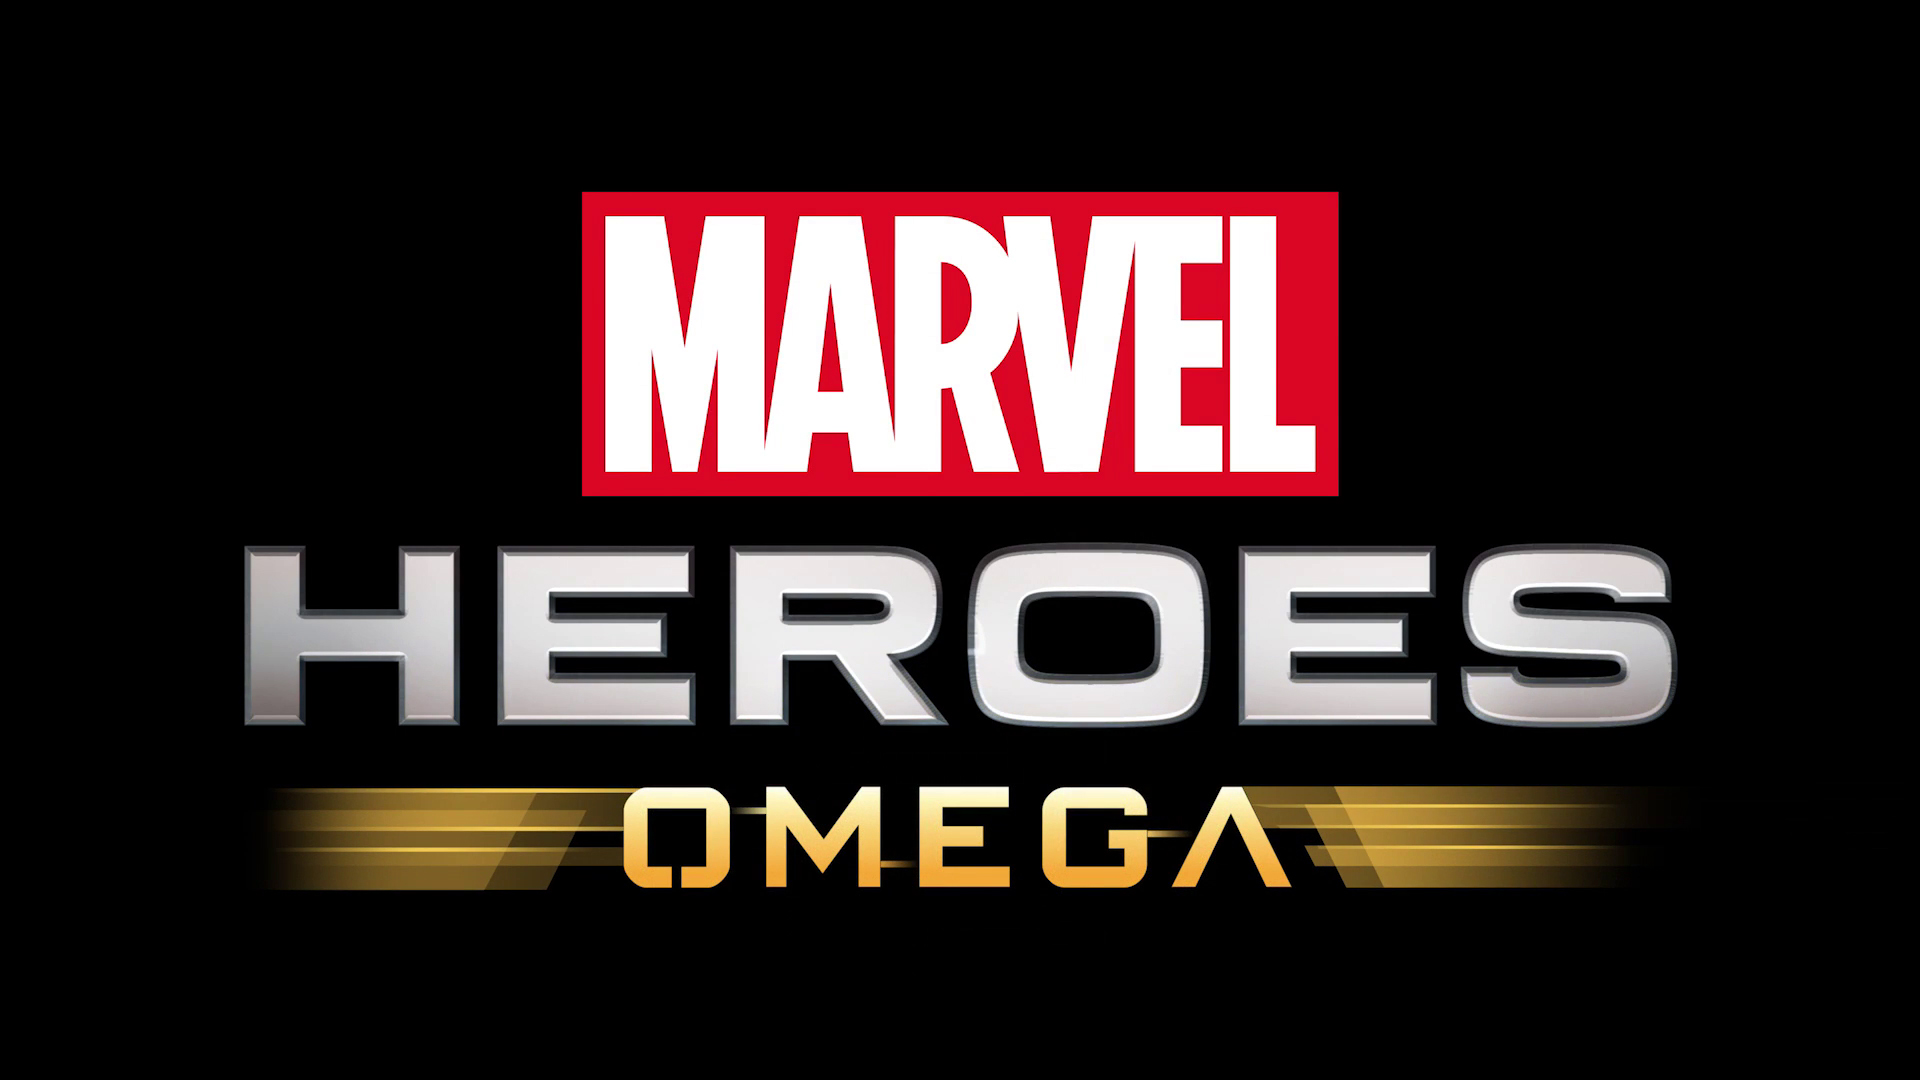  Marvel Heroes Omega Lock Screen PC Wallpaper